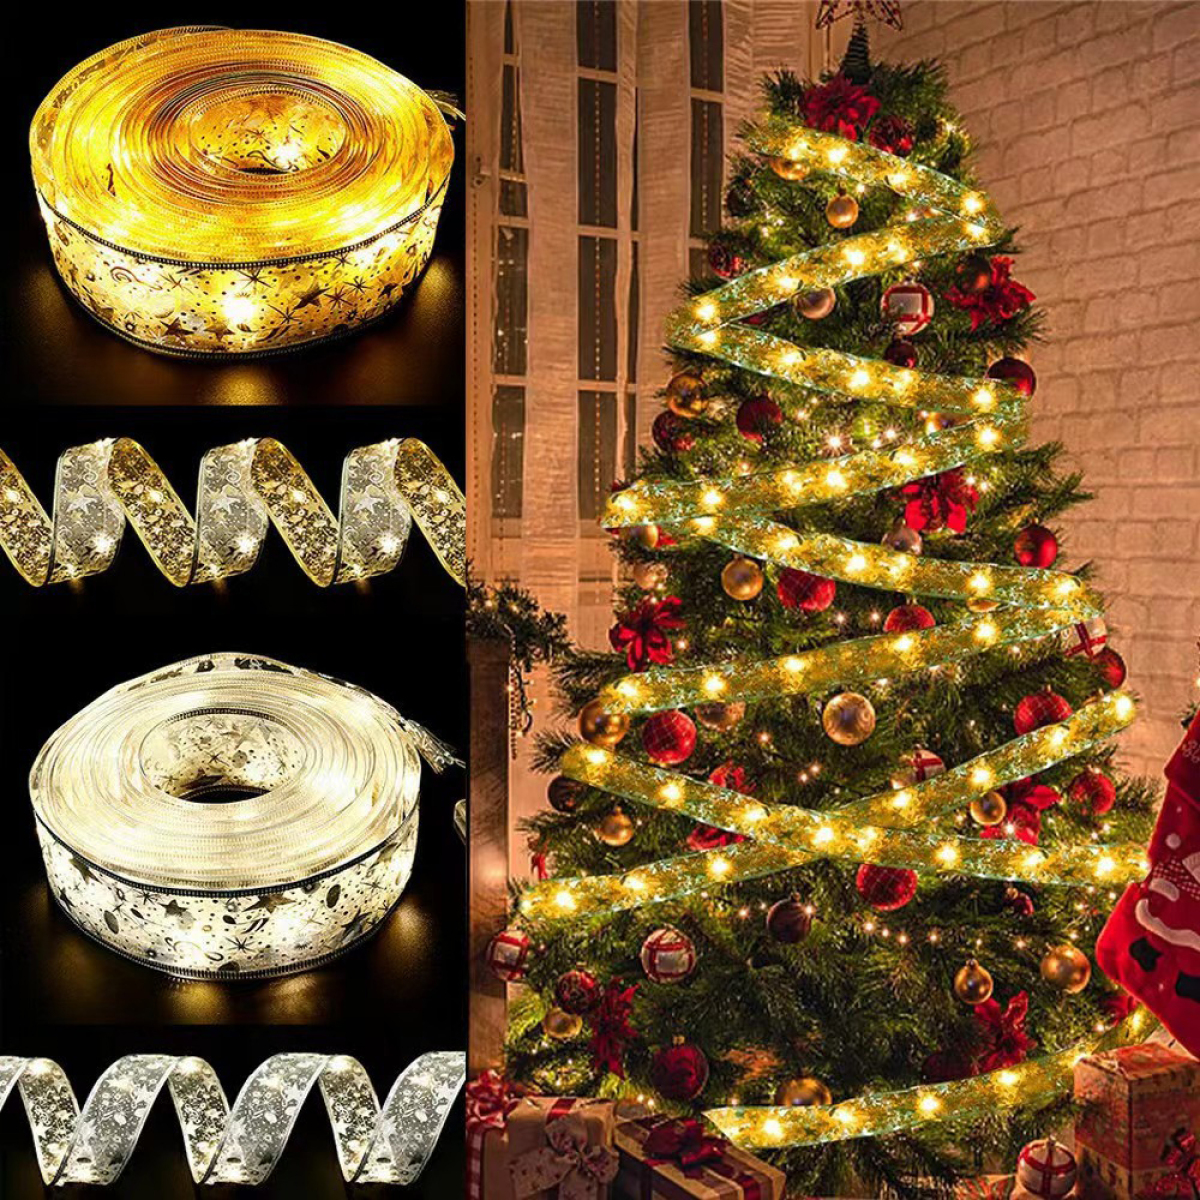 Xmas Tree Ribbon Party for COZEVDNT Weihnachtsdeko, and Garden Christmas Lights - Decor Gold